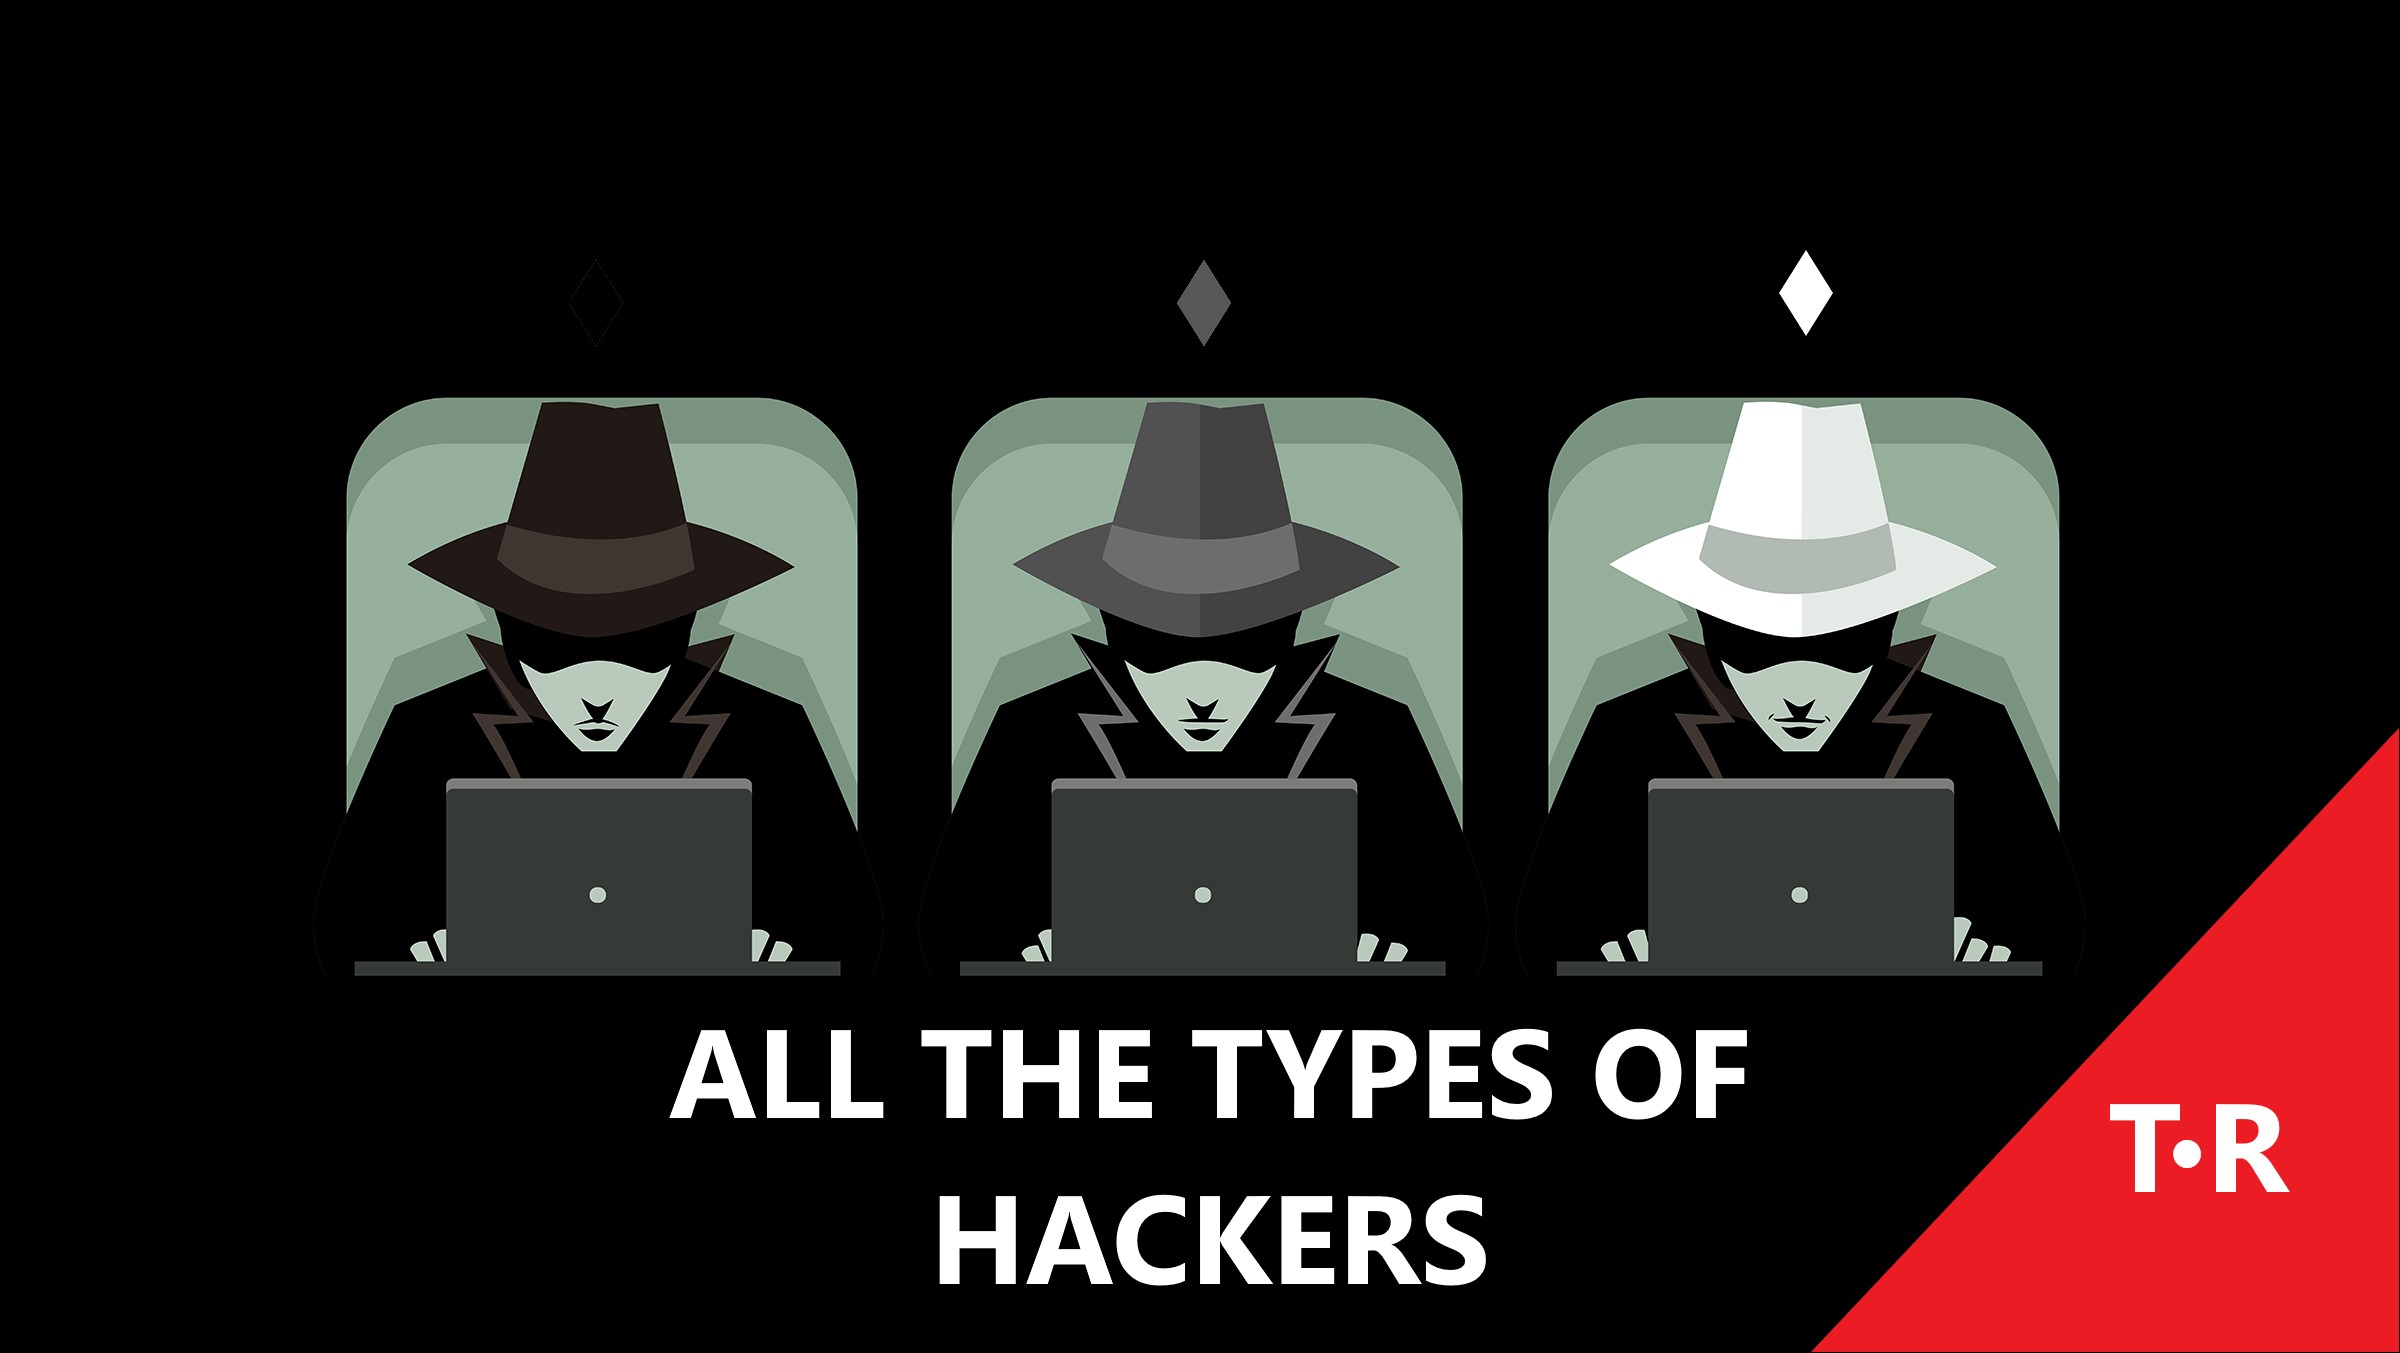 white_hat_grey_hat_black_hat_hackers